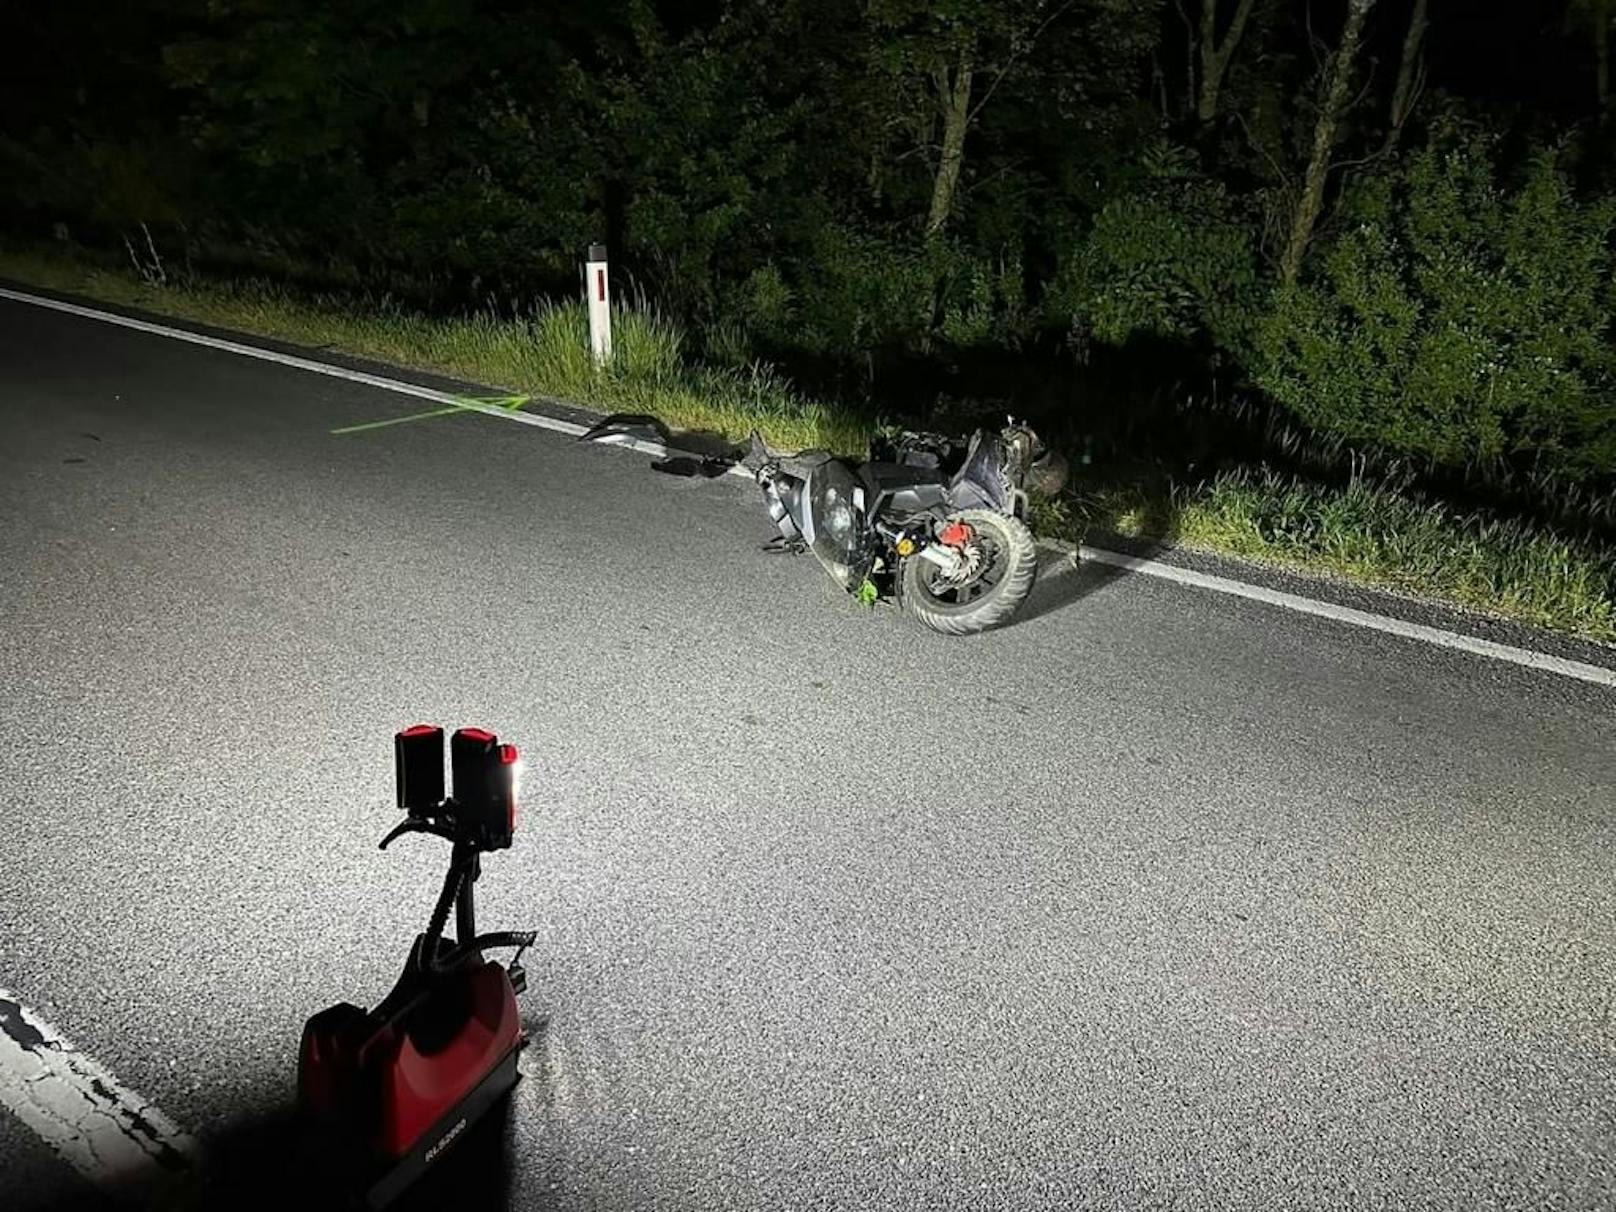 Wiener (18) schwer verletzt! Alkolenker übersah Moped